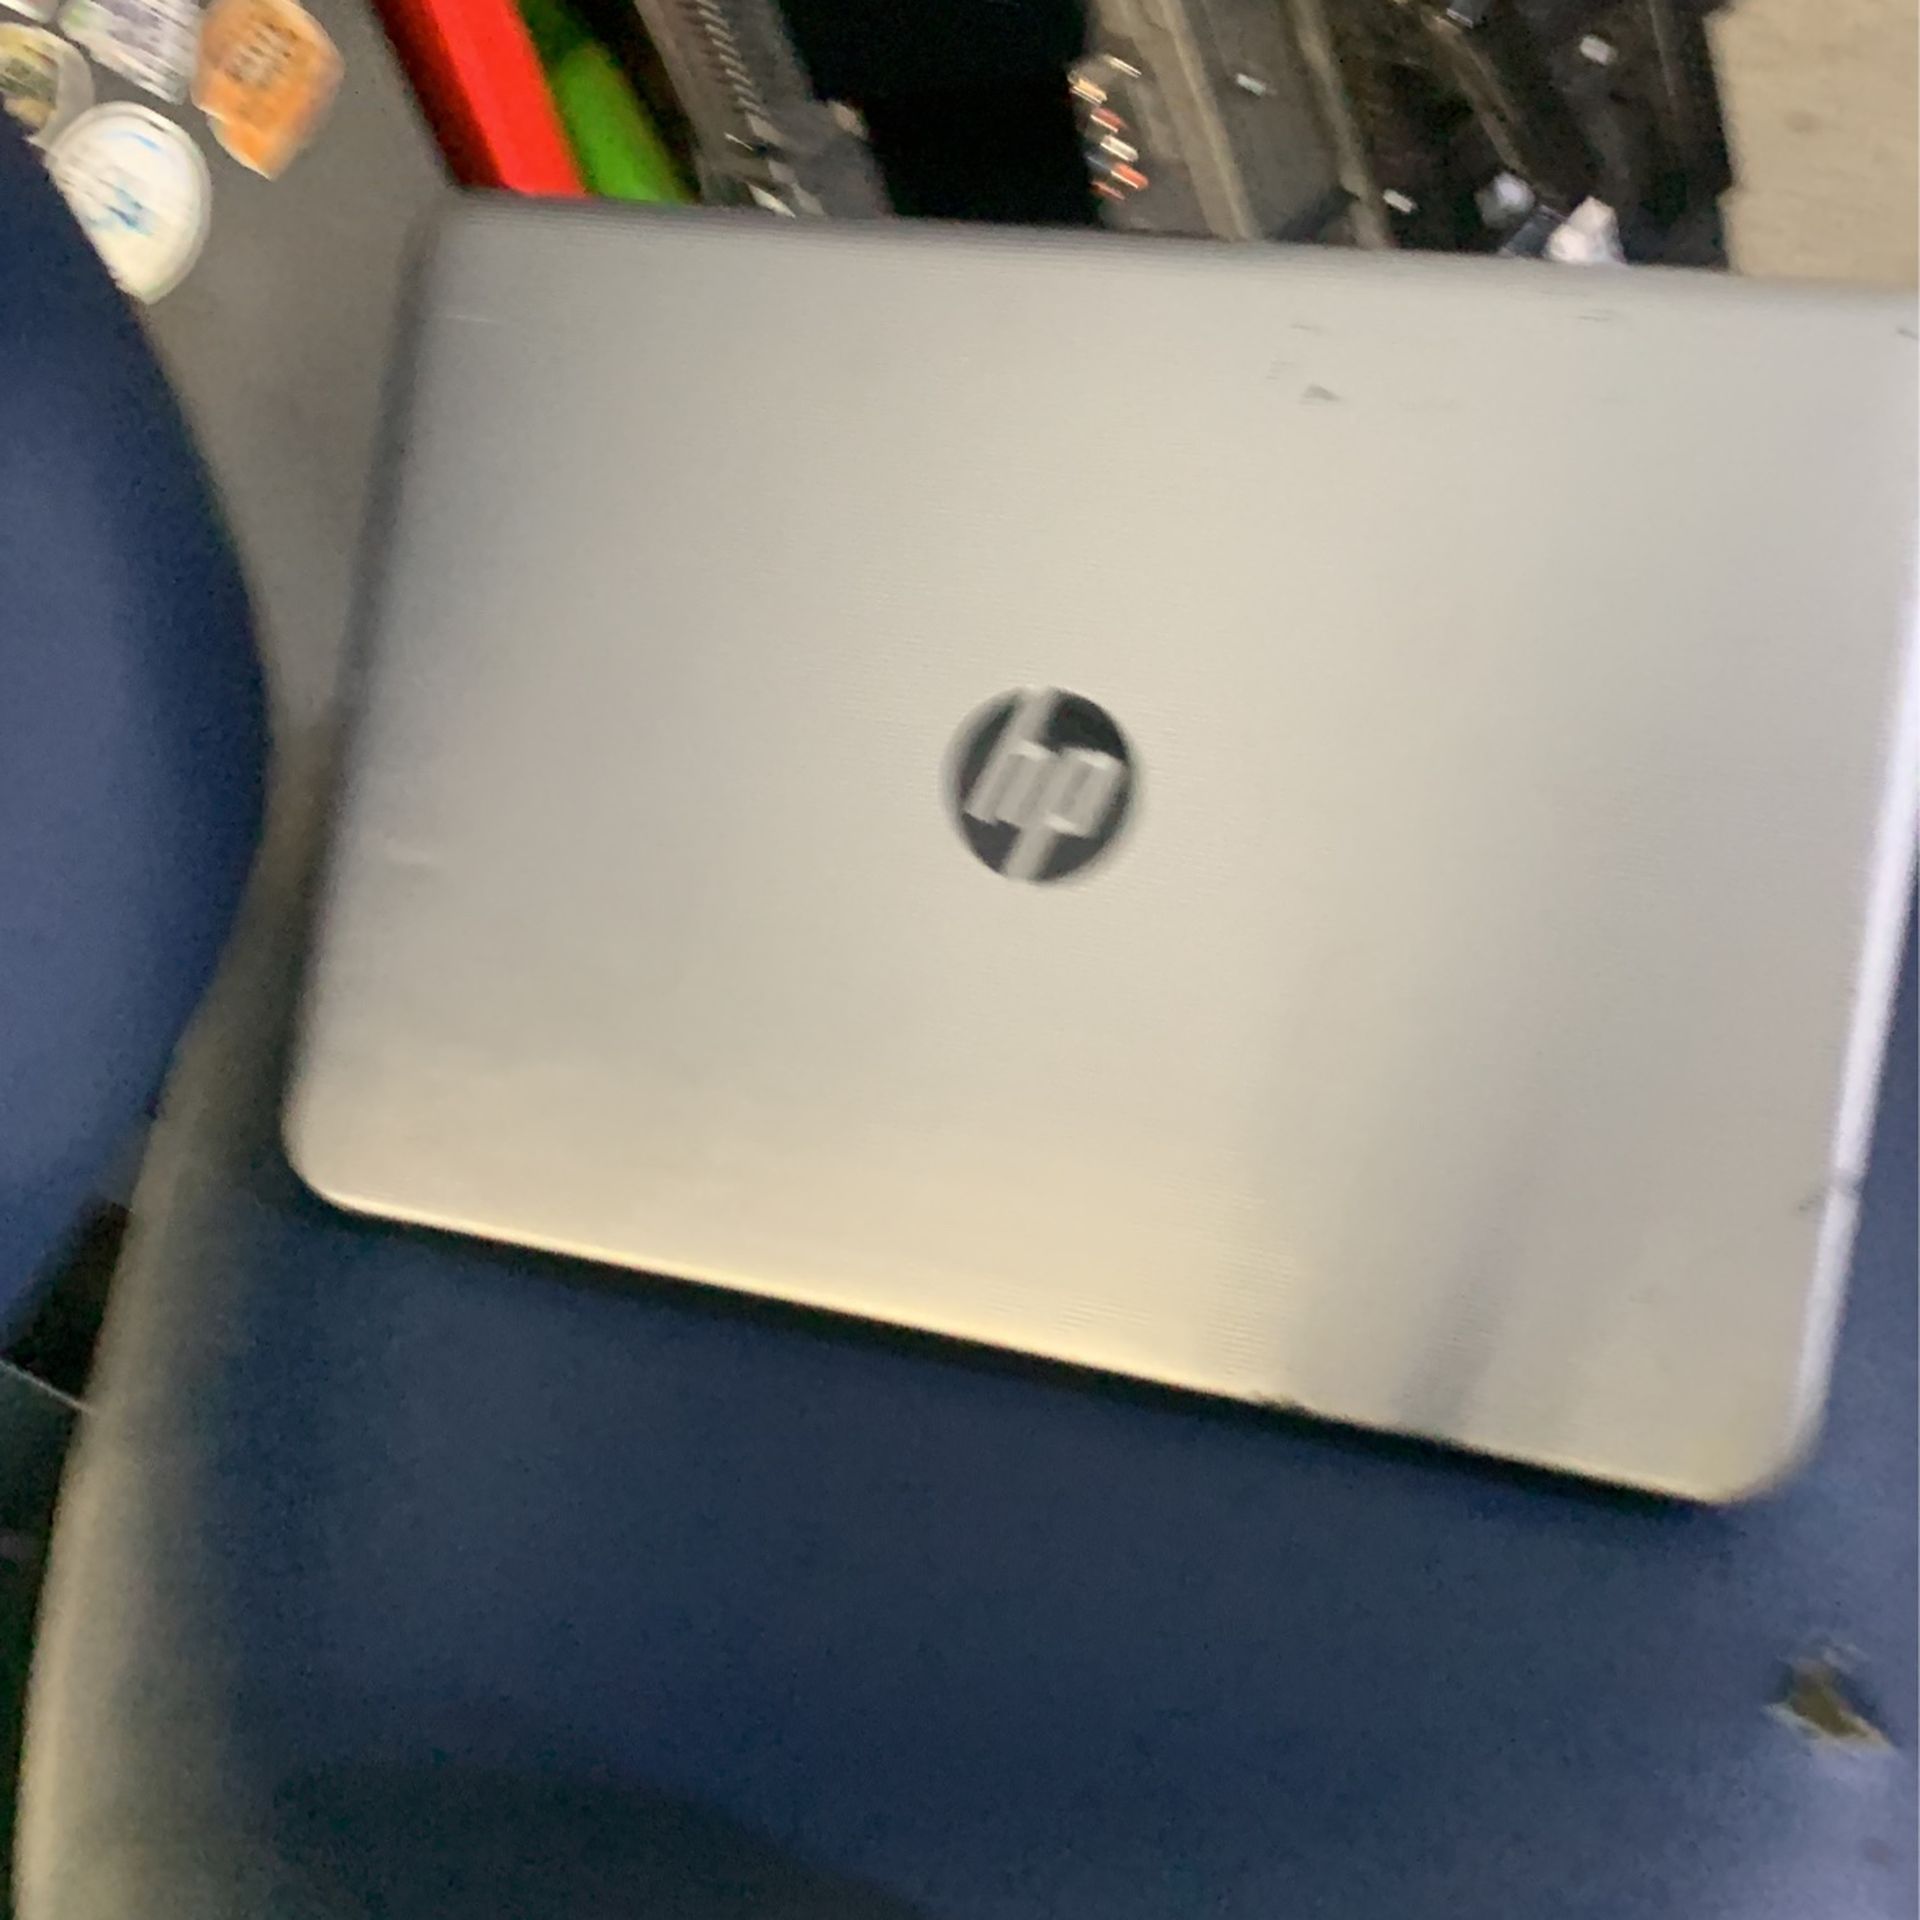 Hp Laptop 